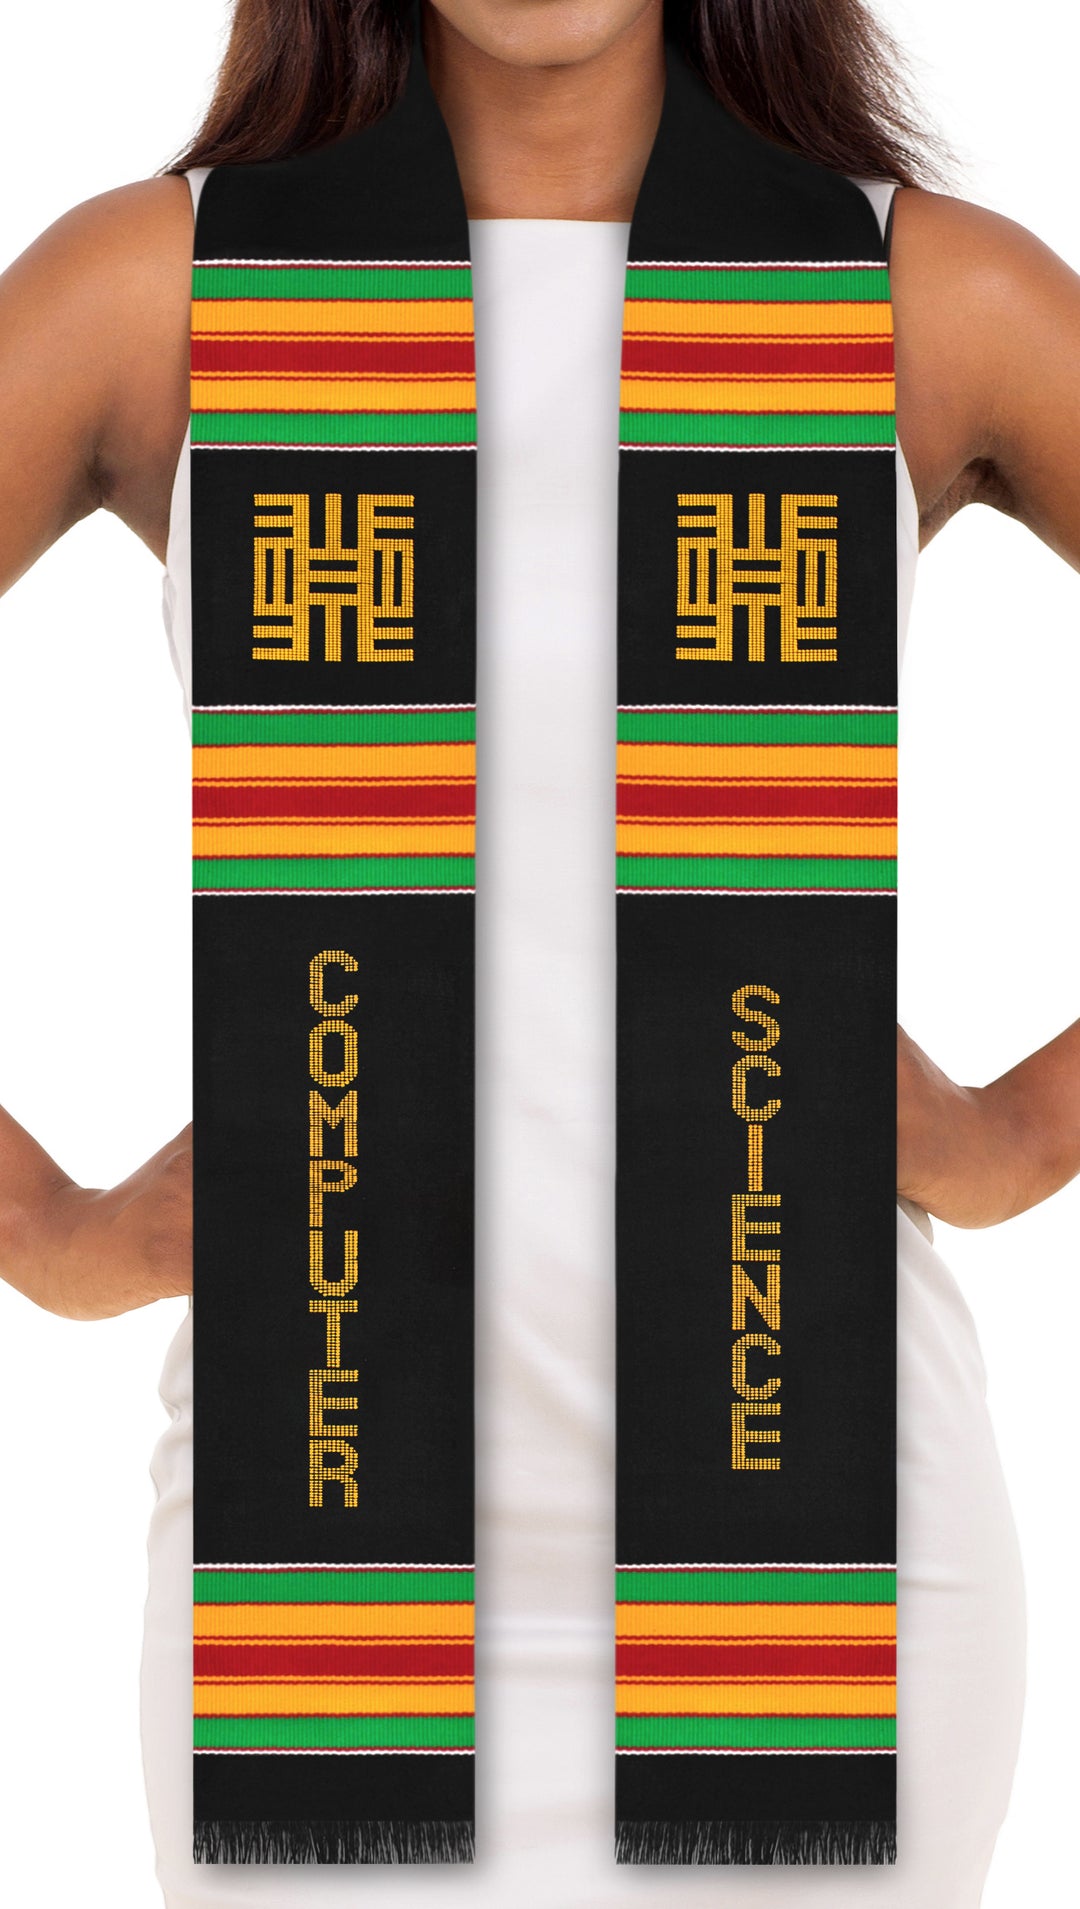 Computer Science Major Authentic Handwoven Kente Cloth Graduation Stole